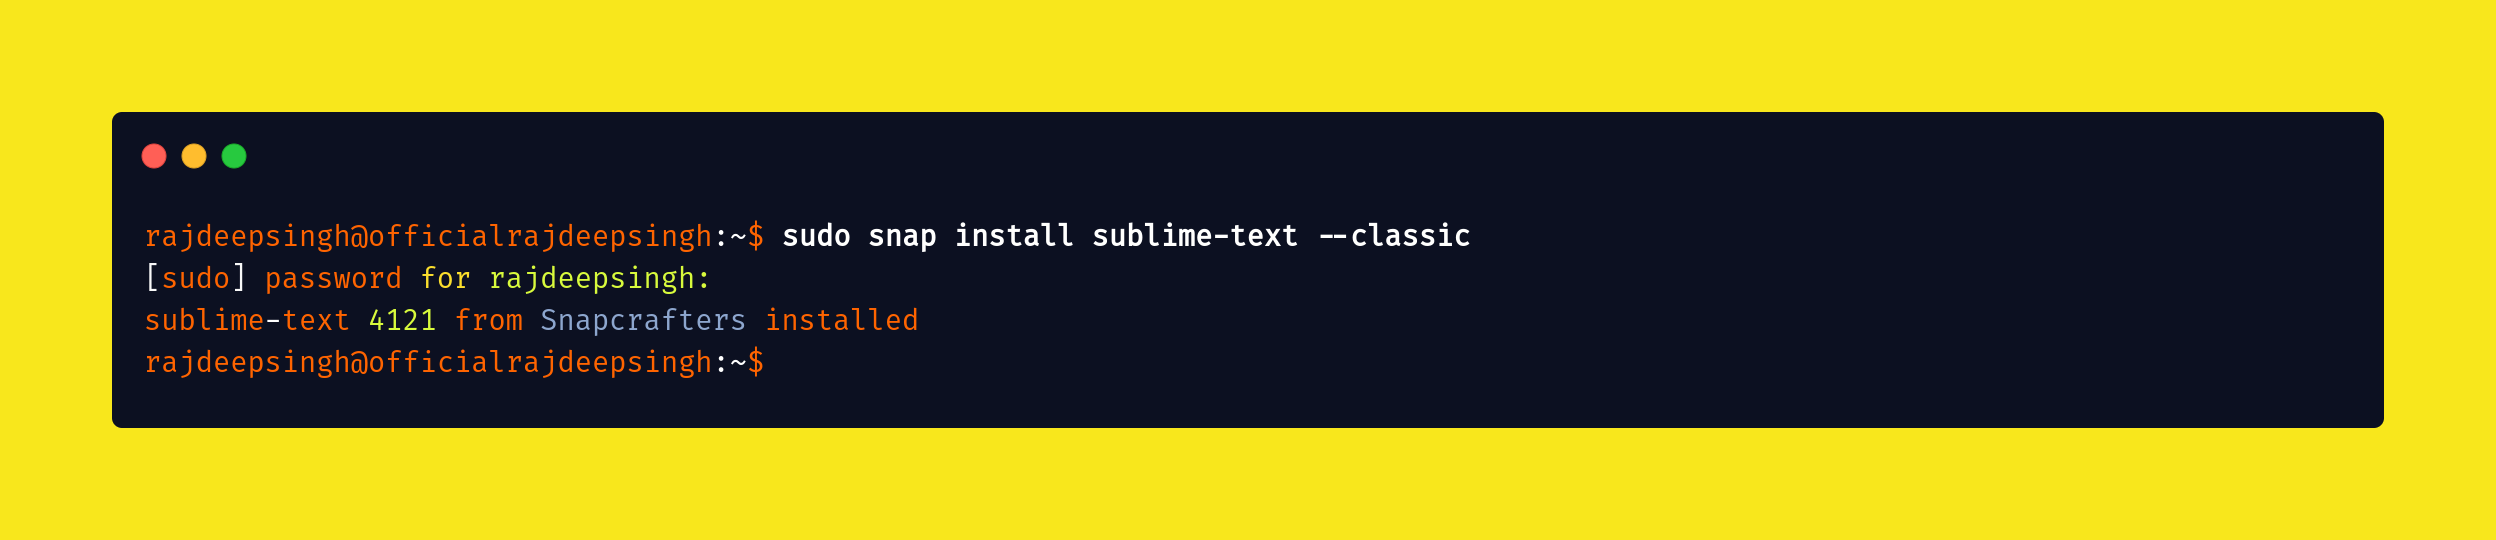 Install sublime-text editor in Ubuntu